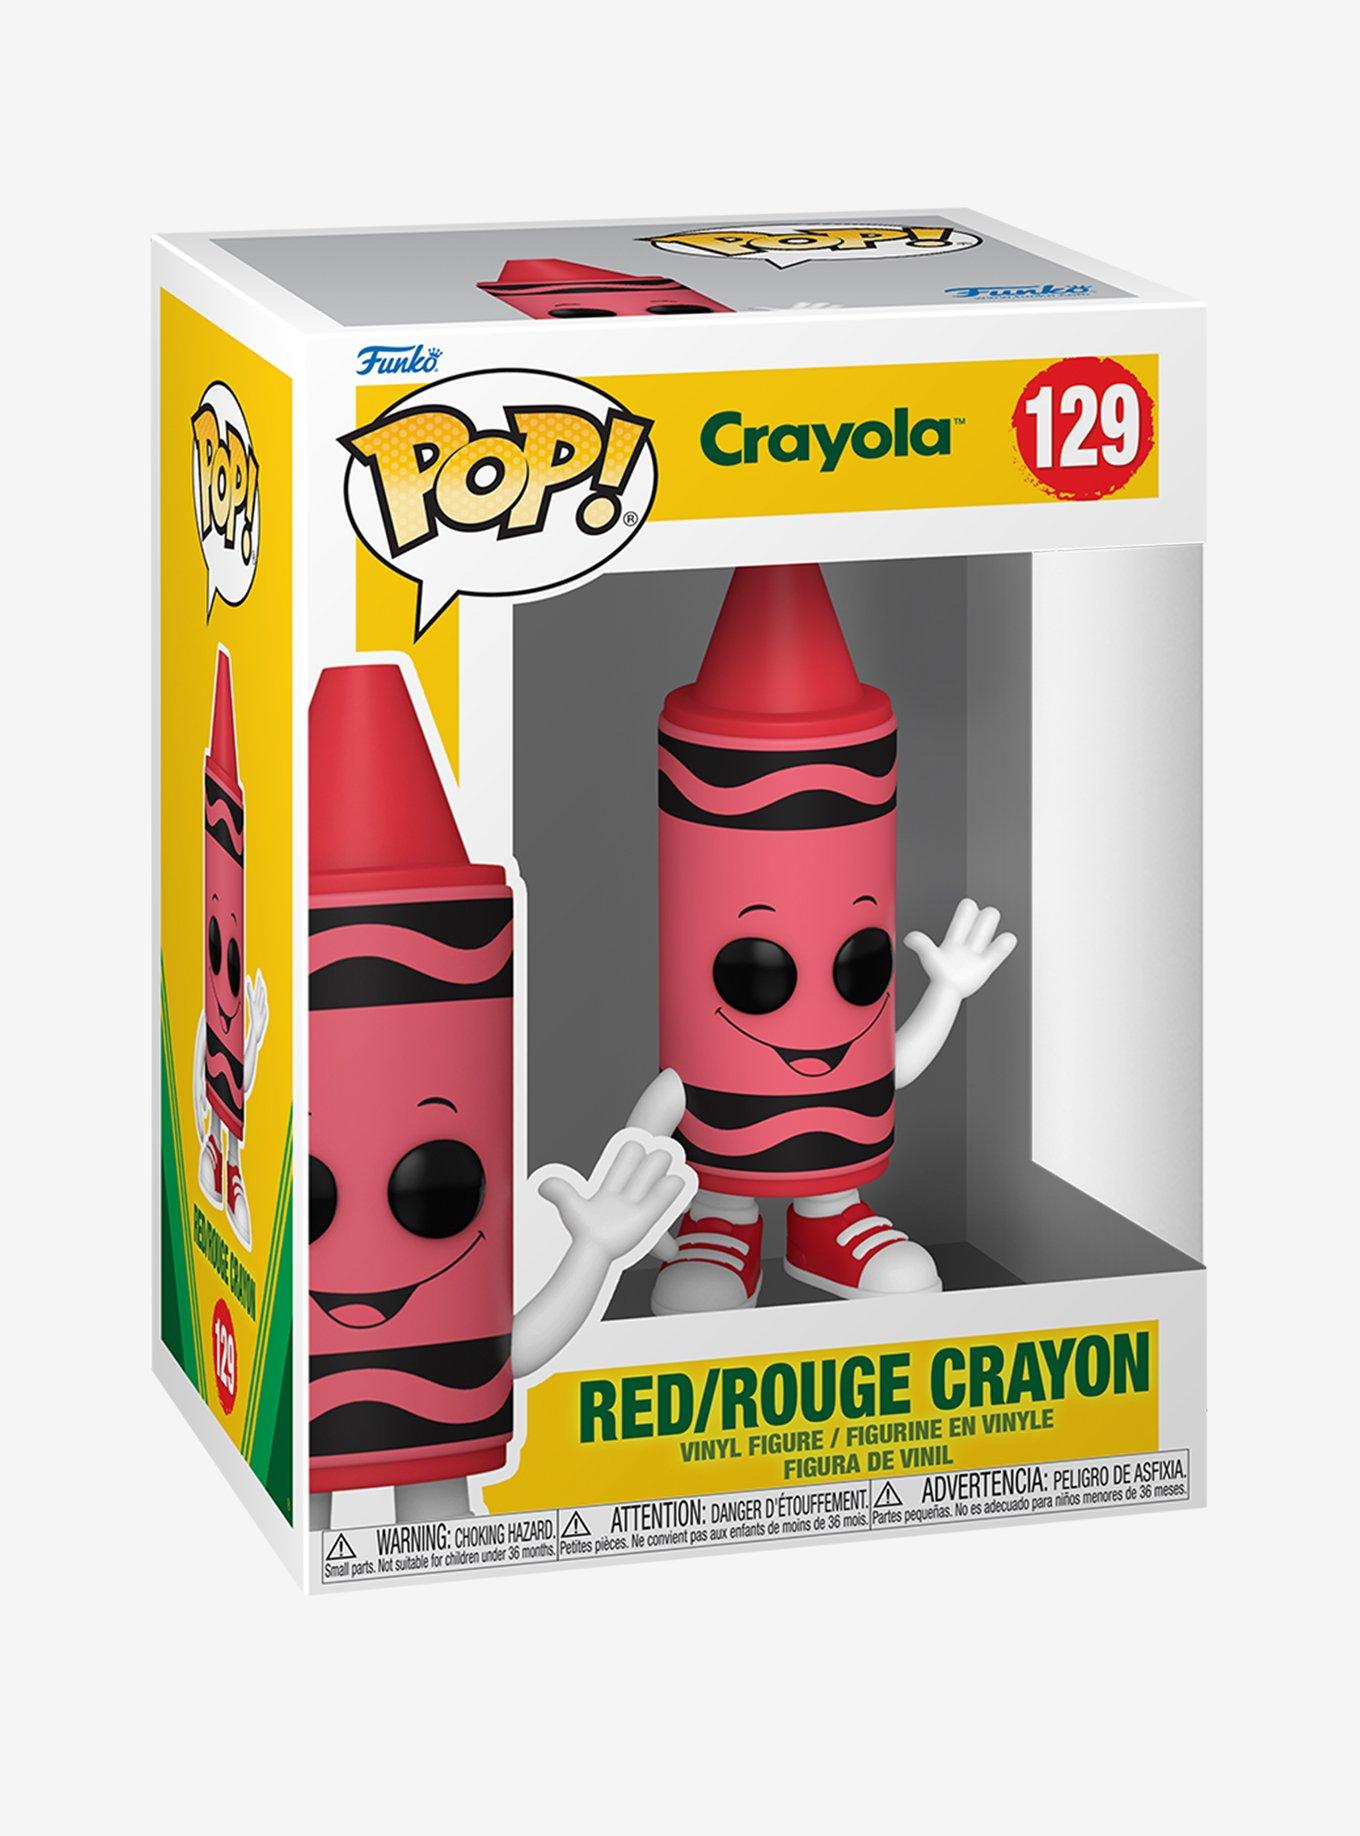 Crayon Box, Clear - Storage Studios